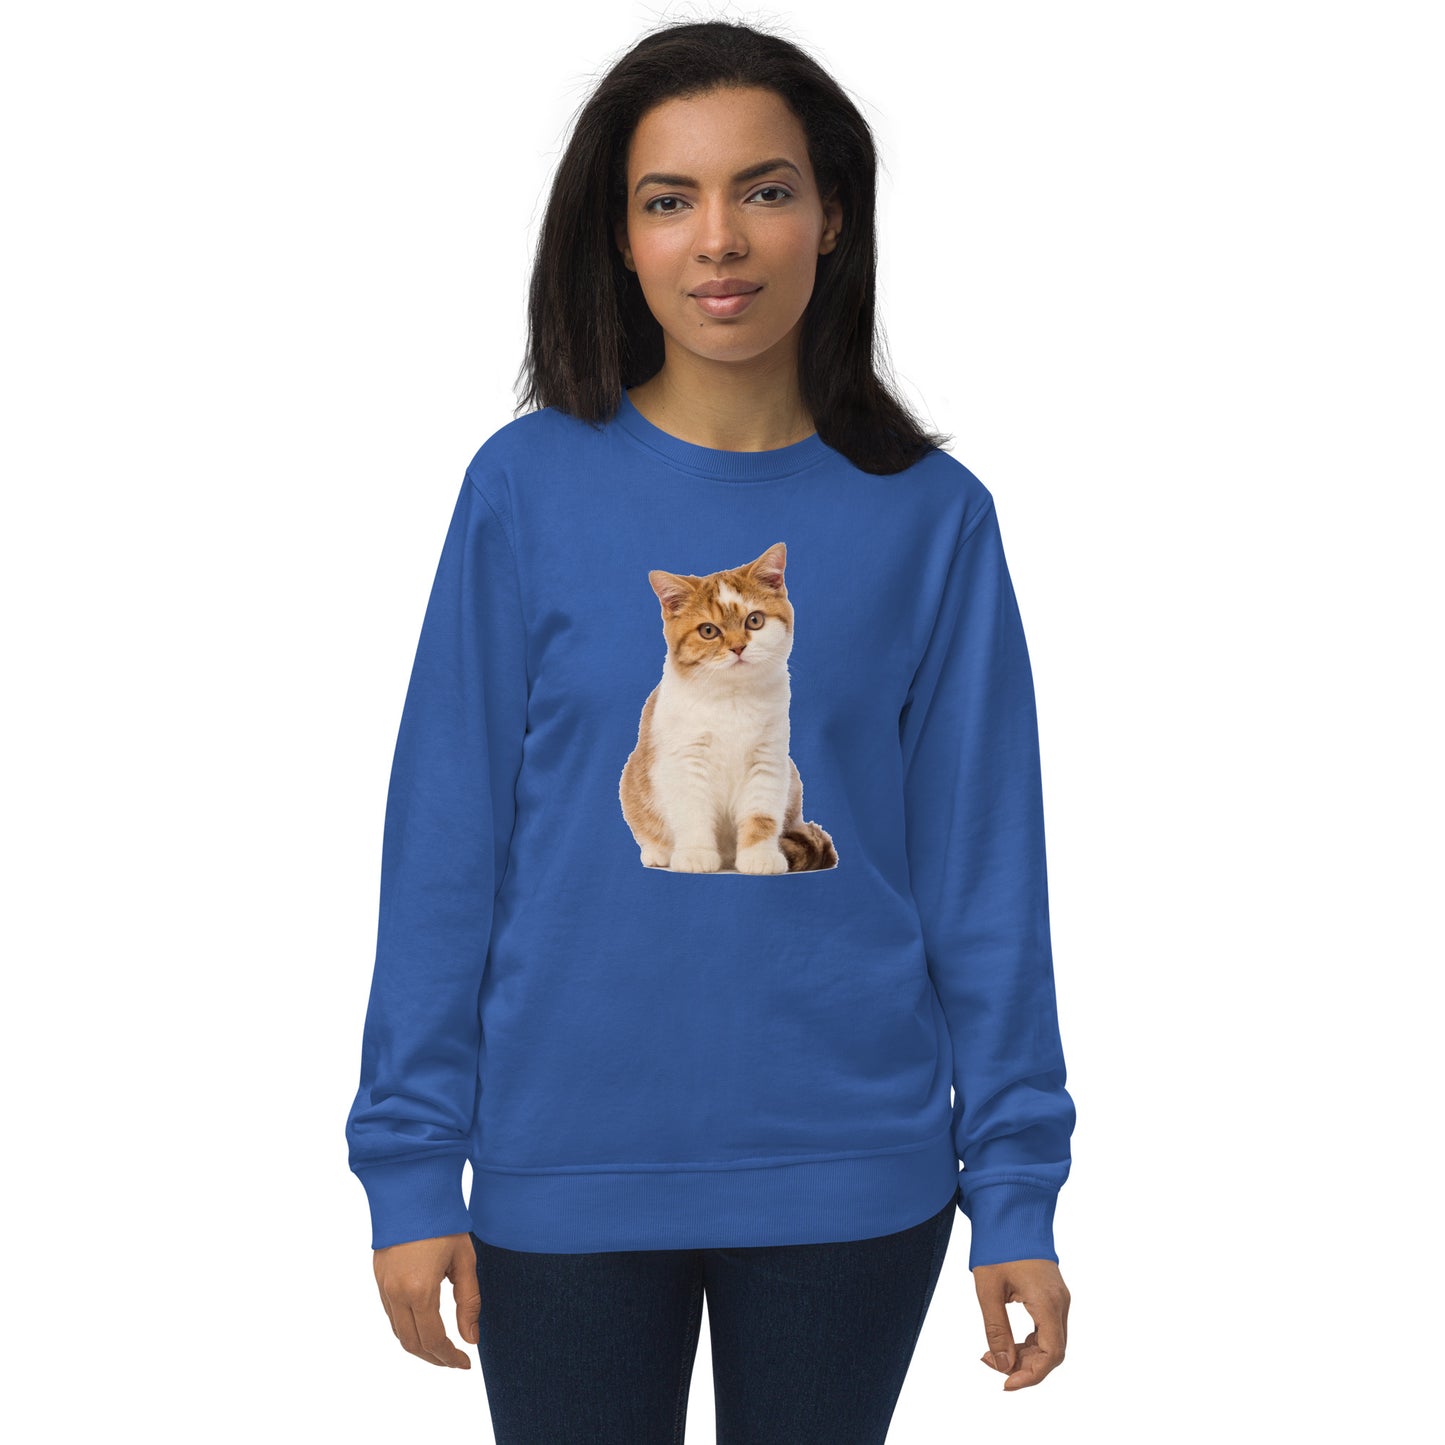 Cat Organic Sweatshirt, Kitten  Graphic Crewneck Fleece Cotton Sweater Jumper Pullover Men Women Adult Aesthetic Top Starcove Fashion